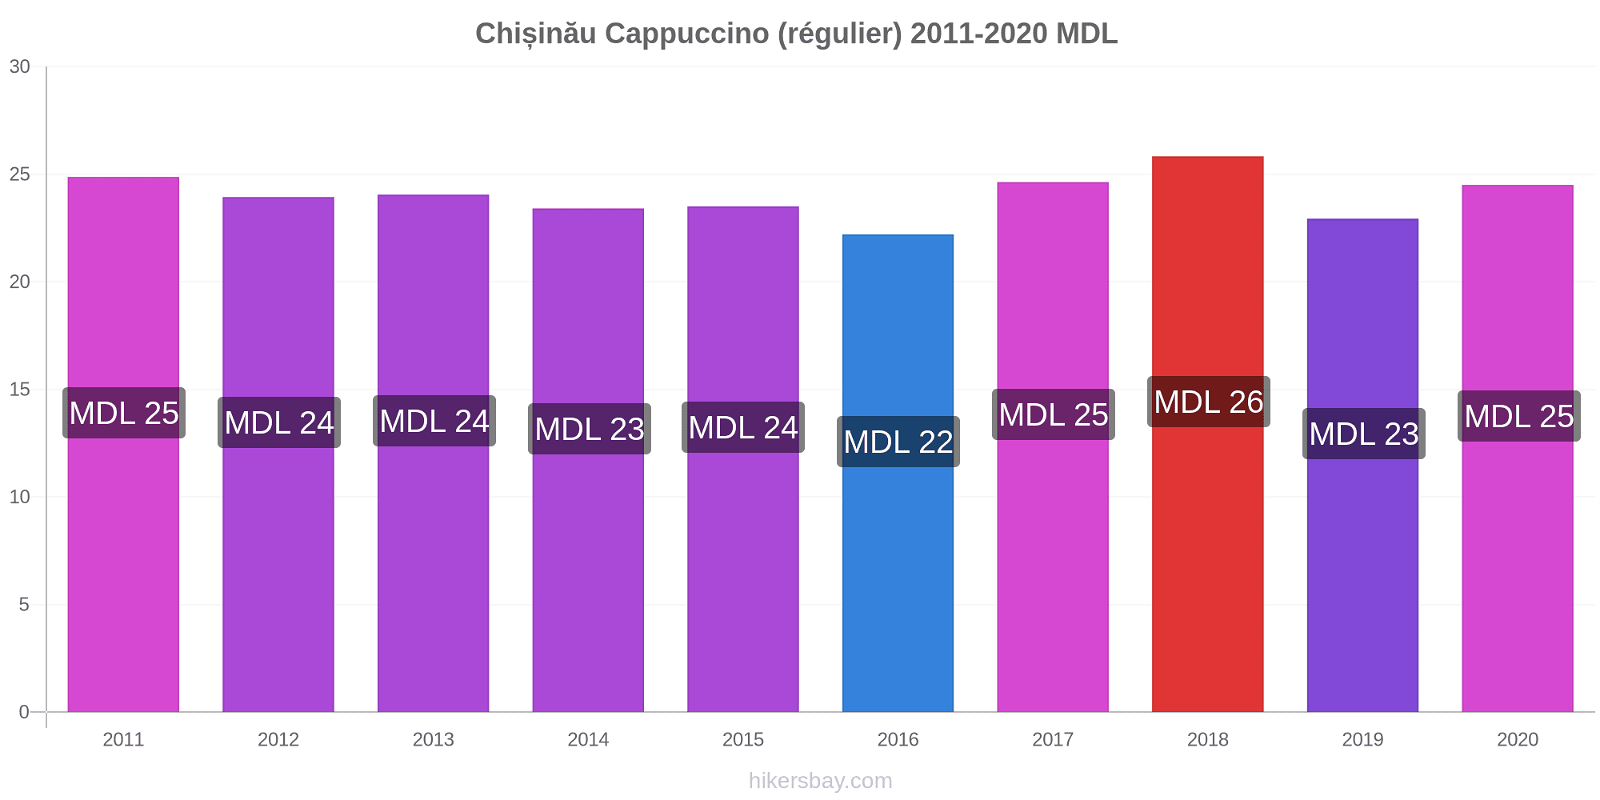 Chișinău changements de prix Cappuccino (régulier) hikersbay.com